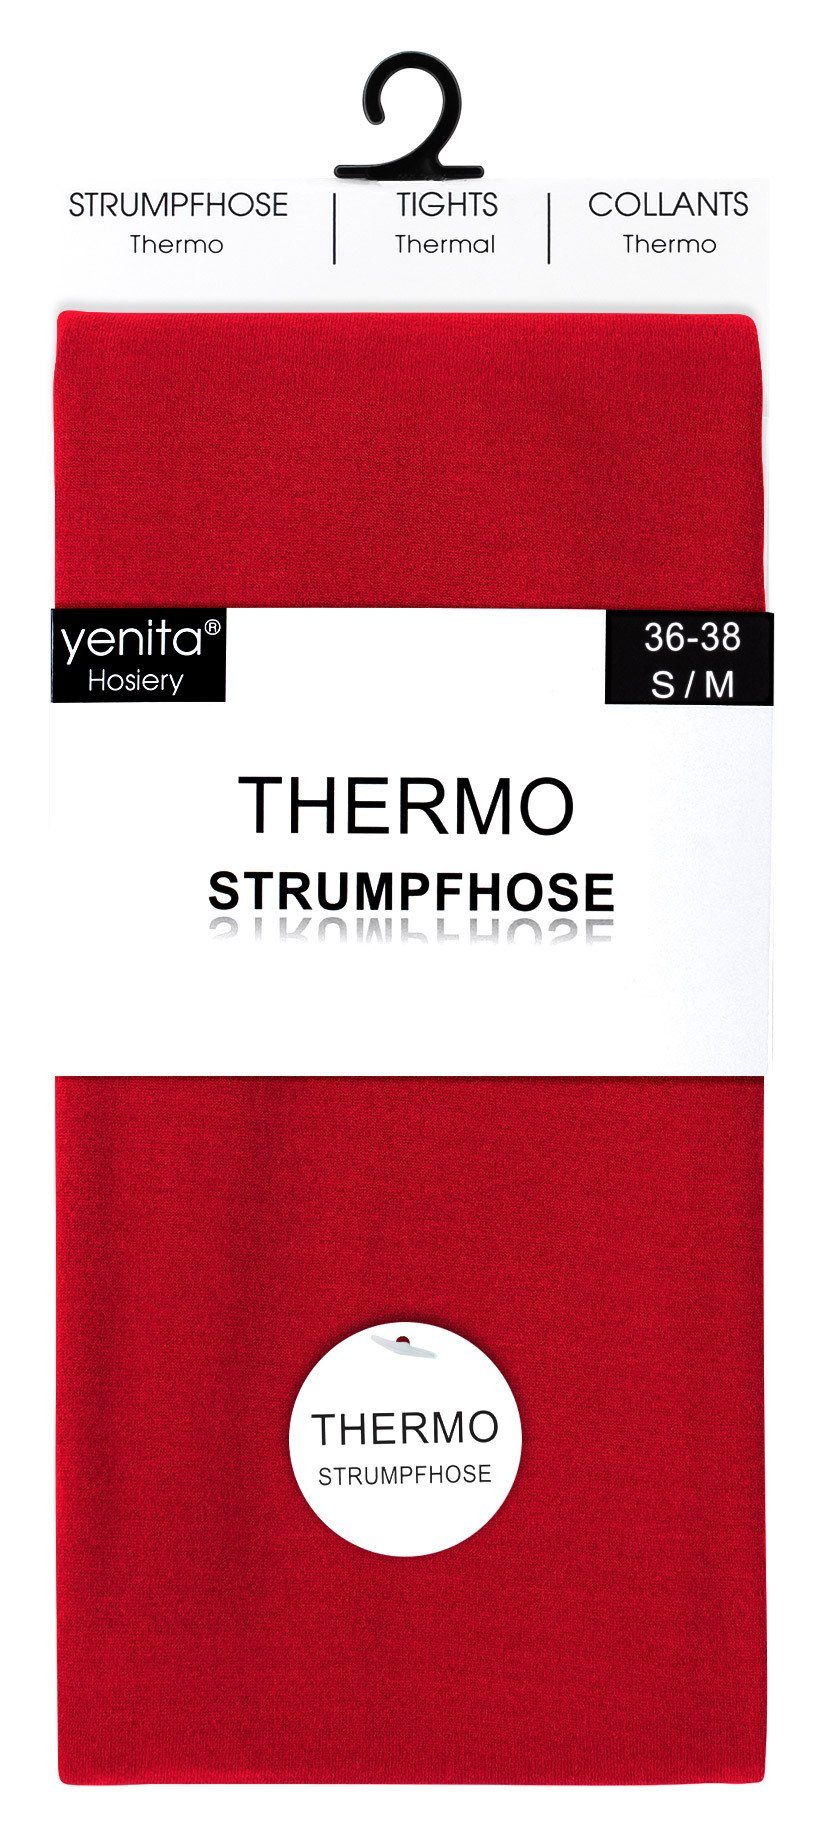 Yenita® Innenfleece (2 St) wärmenden Thermostrumpfhose rot mit